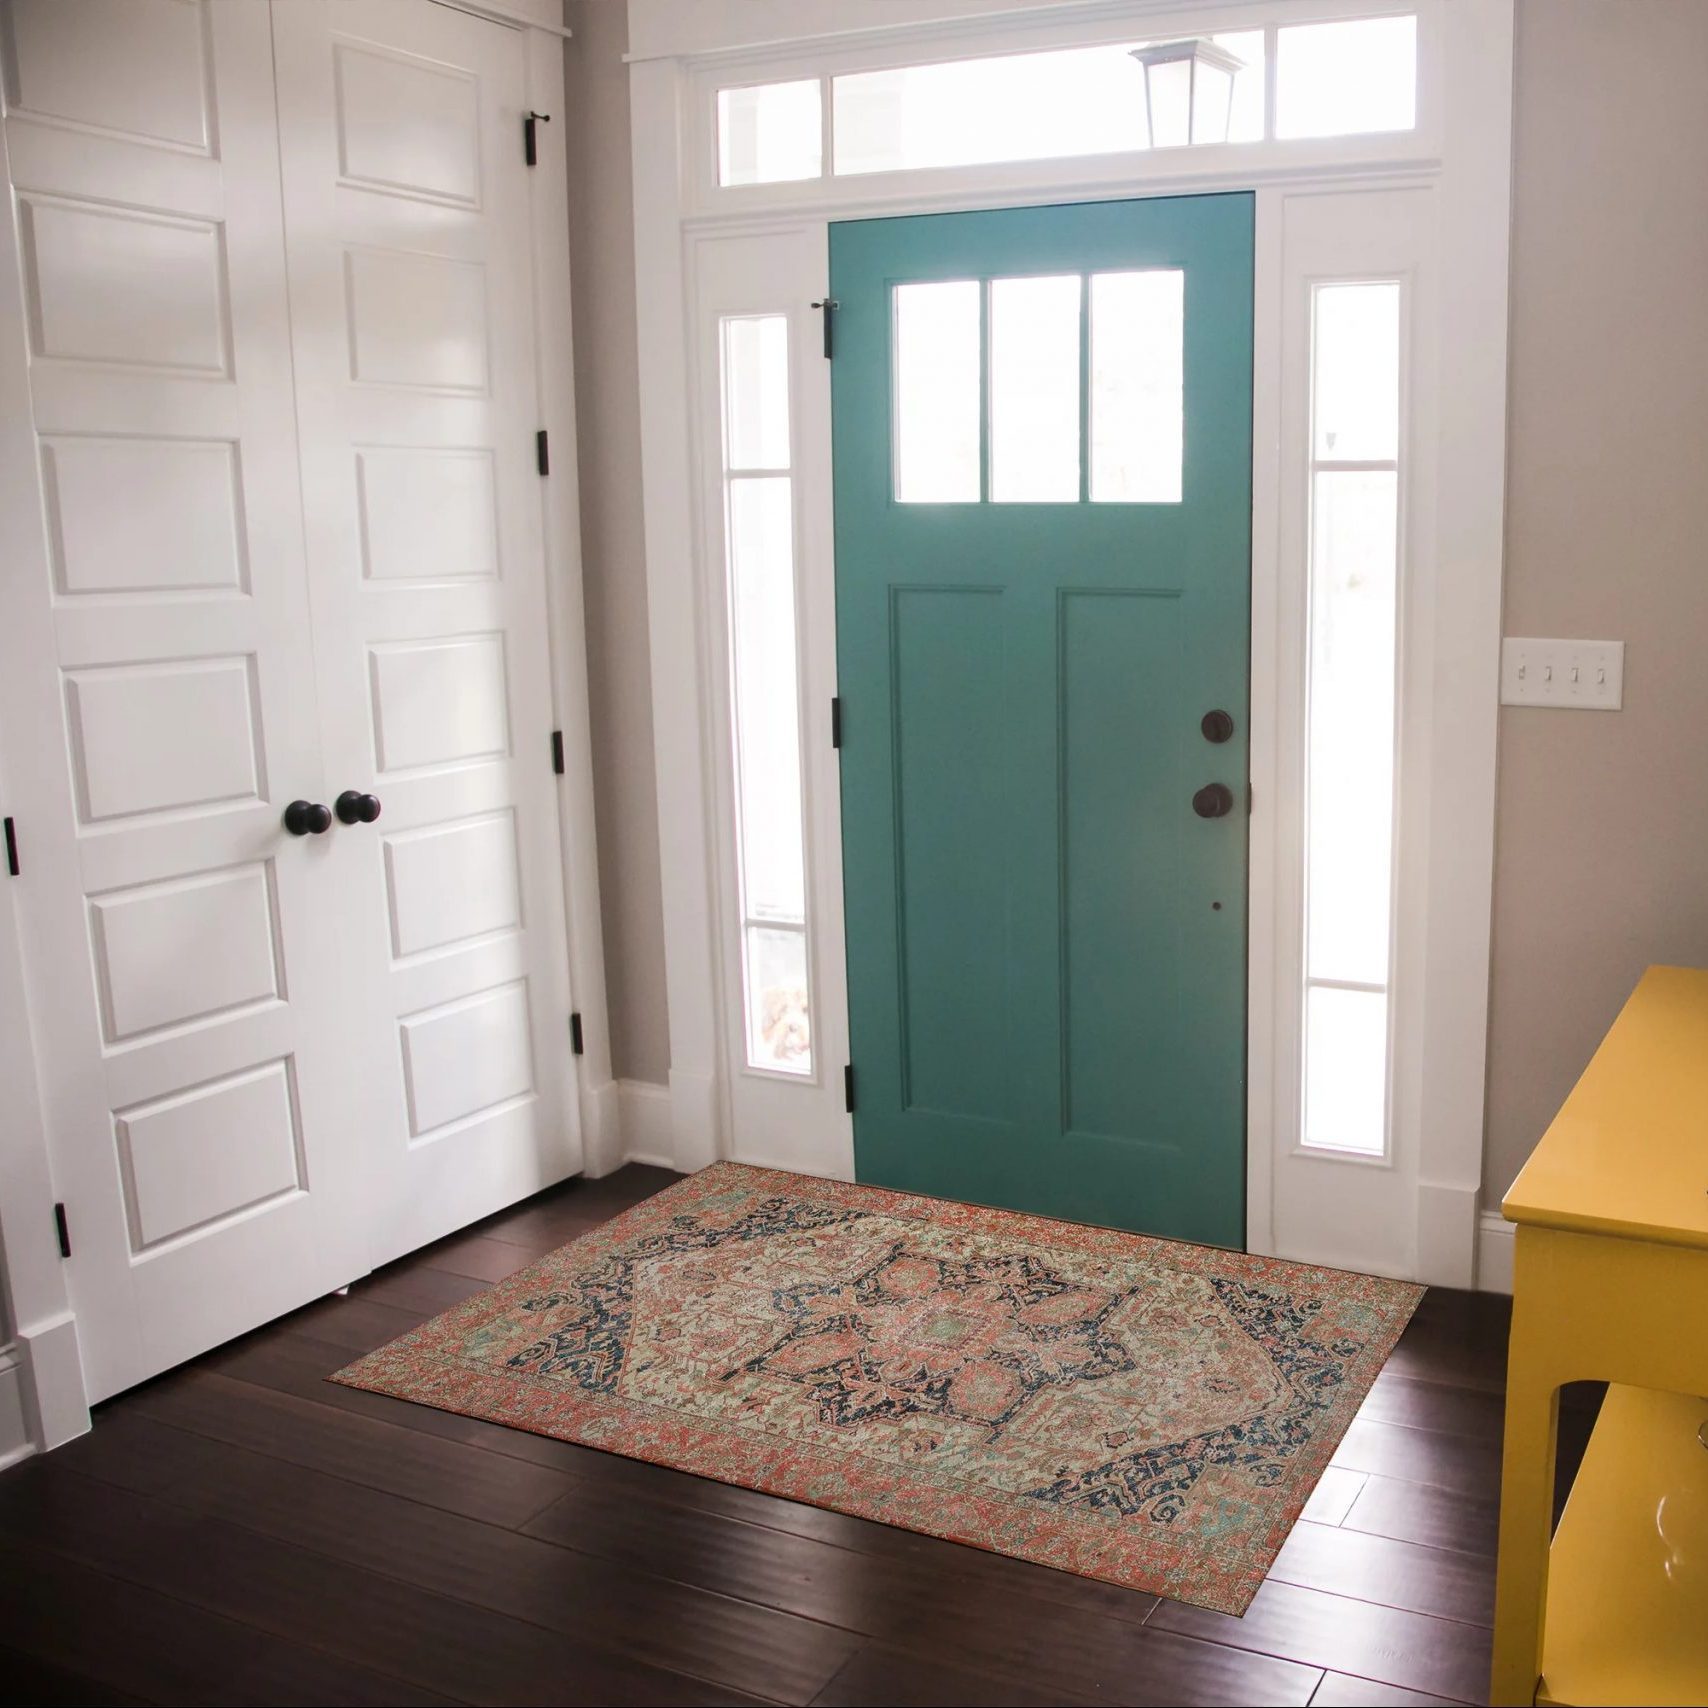 11 Inviting Doormat Ideas for Your Entryway and Front Door